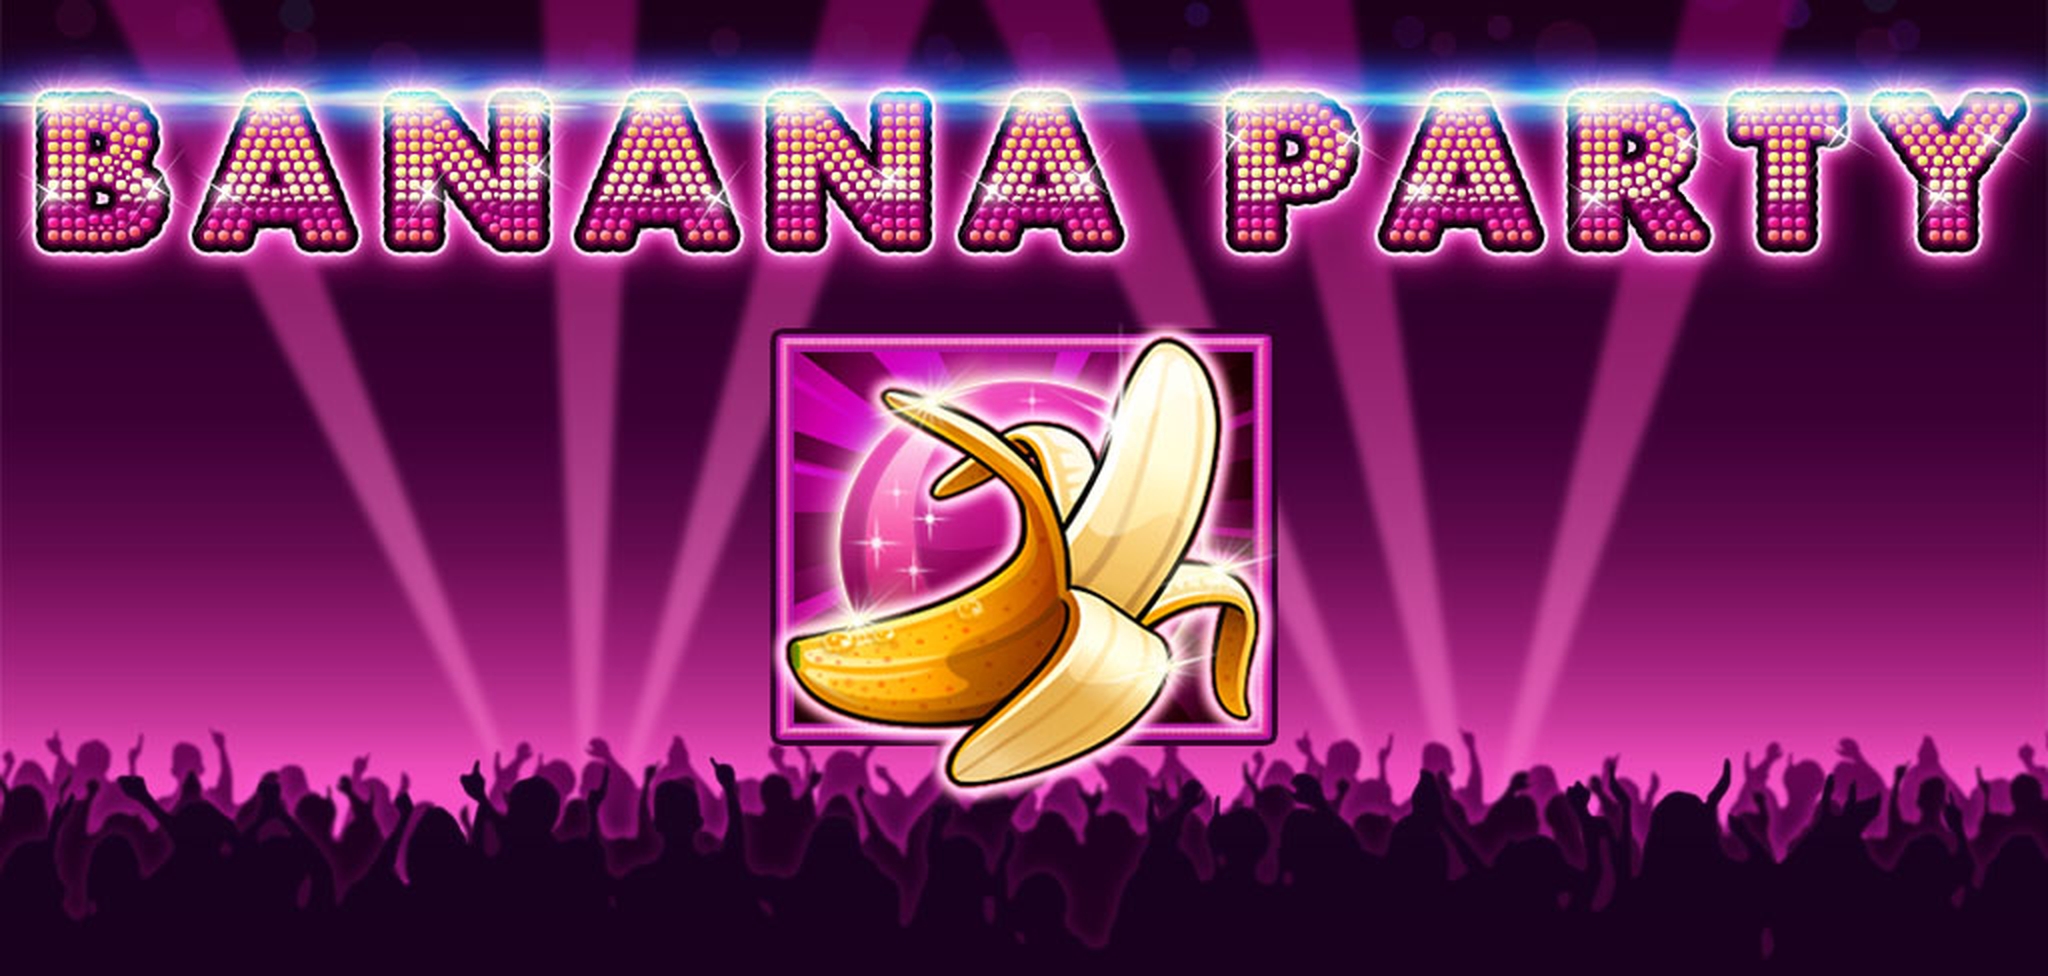 Banana Party demo